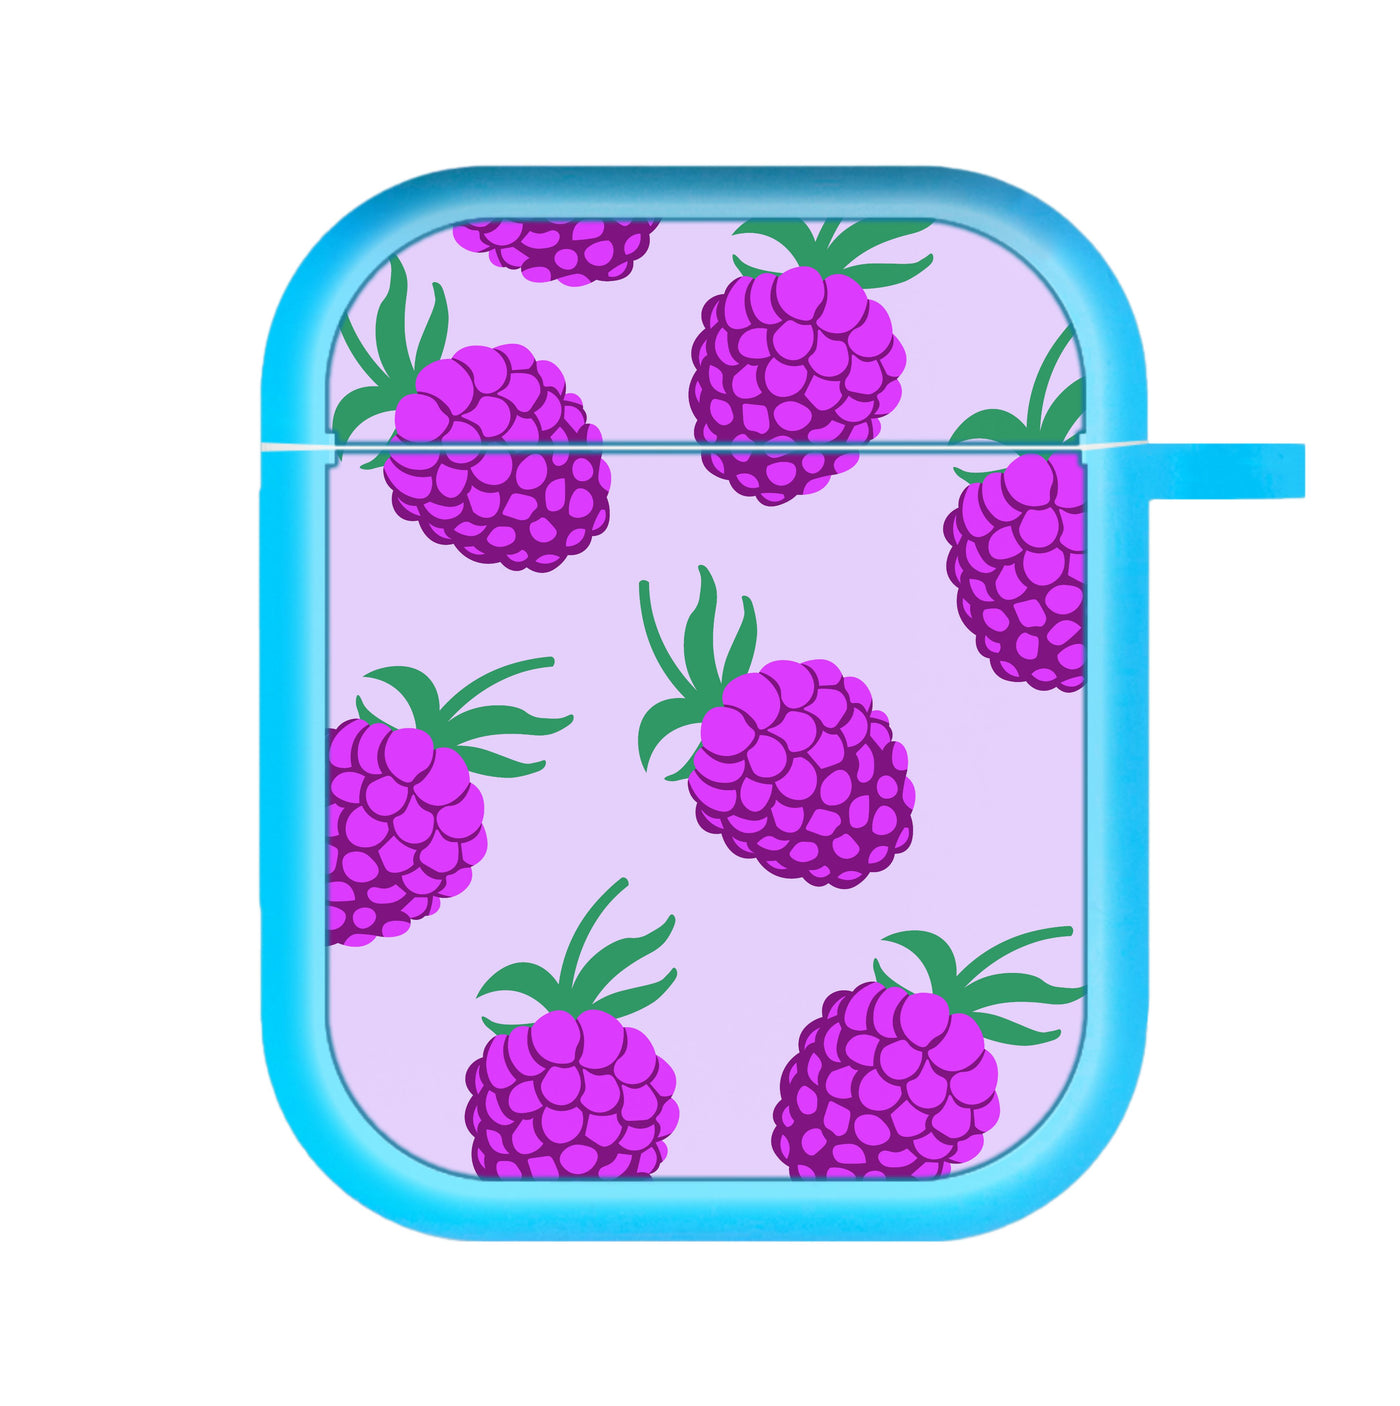 Rasberries - Fruit Patterns AirPods Case